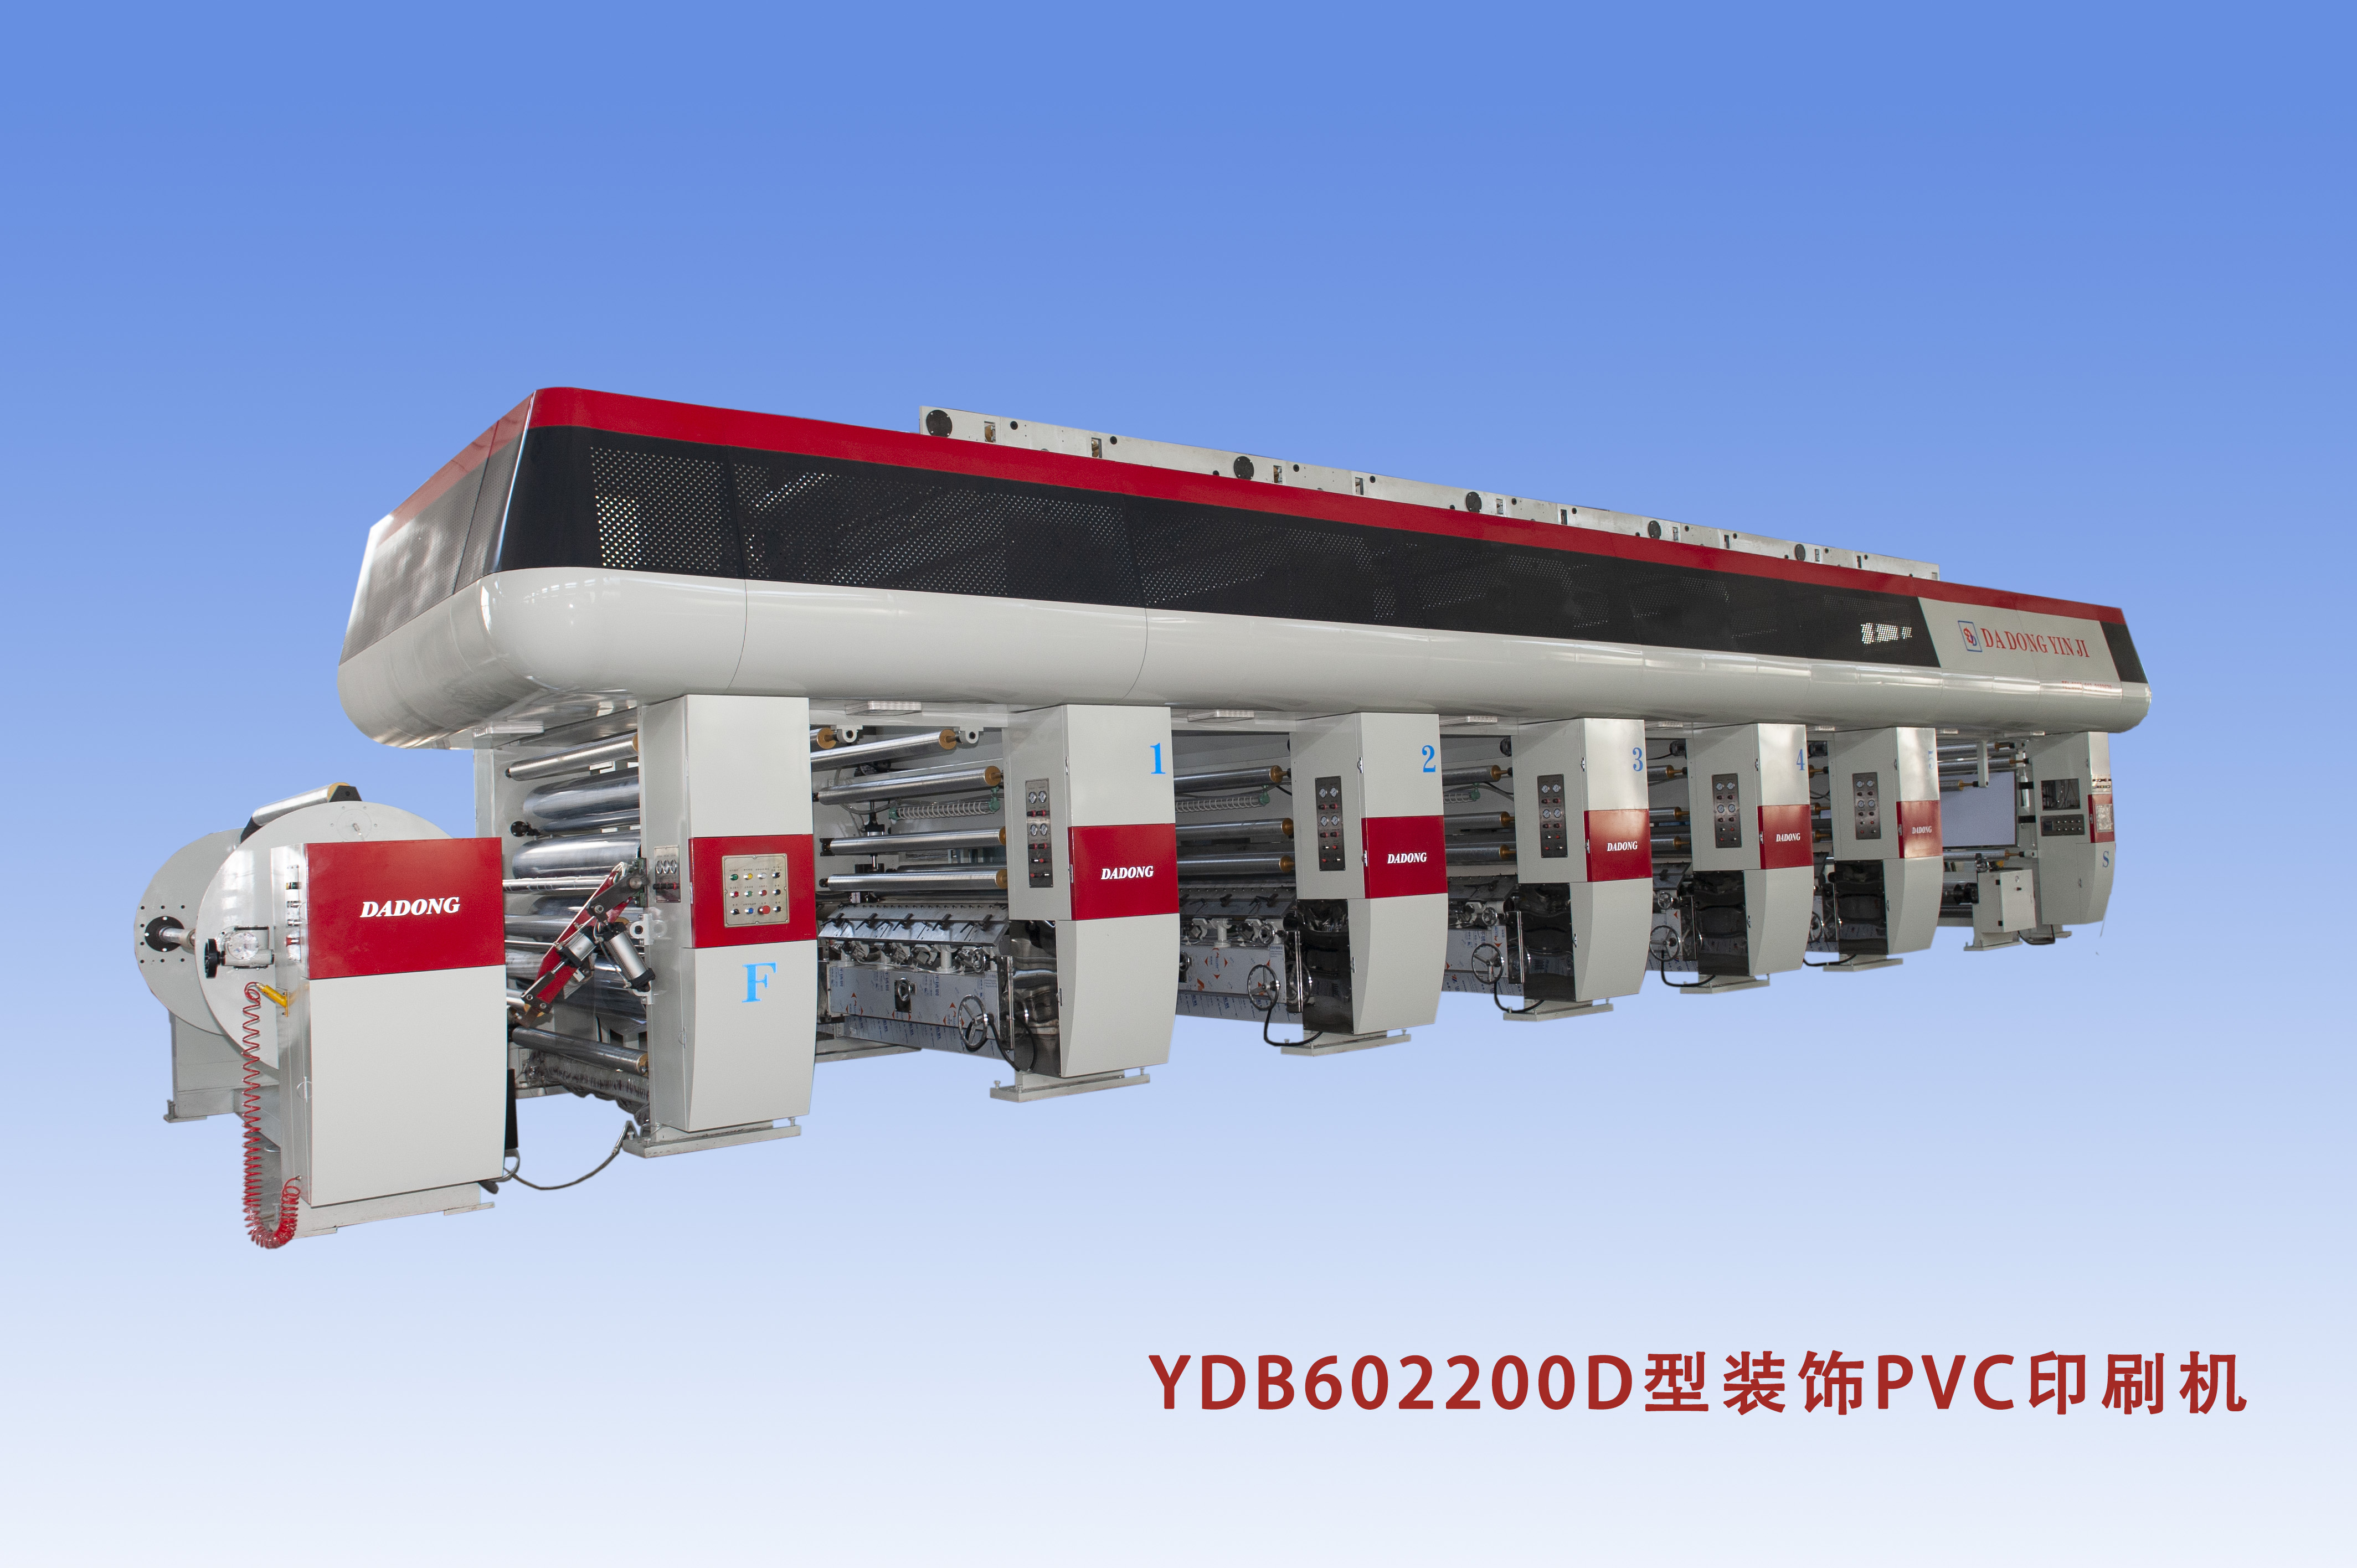 YDB602200D型装饰PVC印刷机